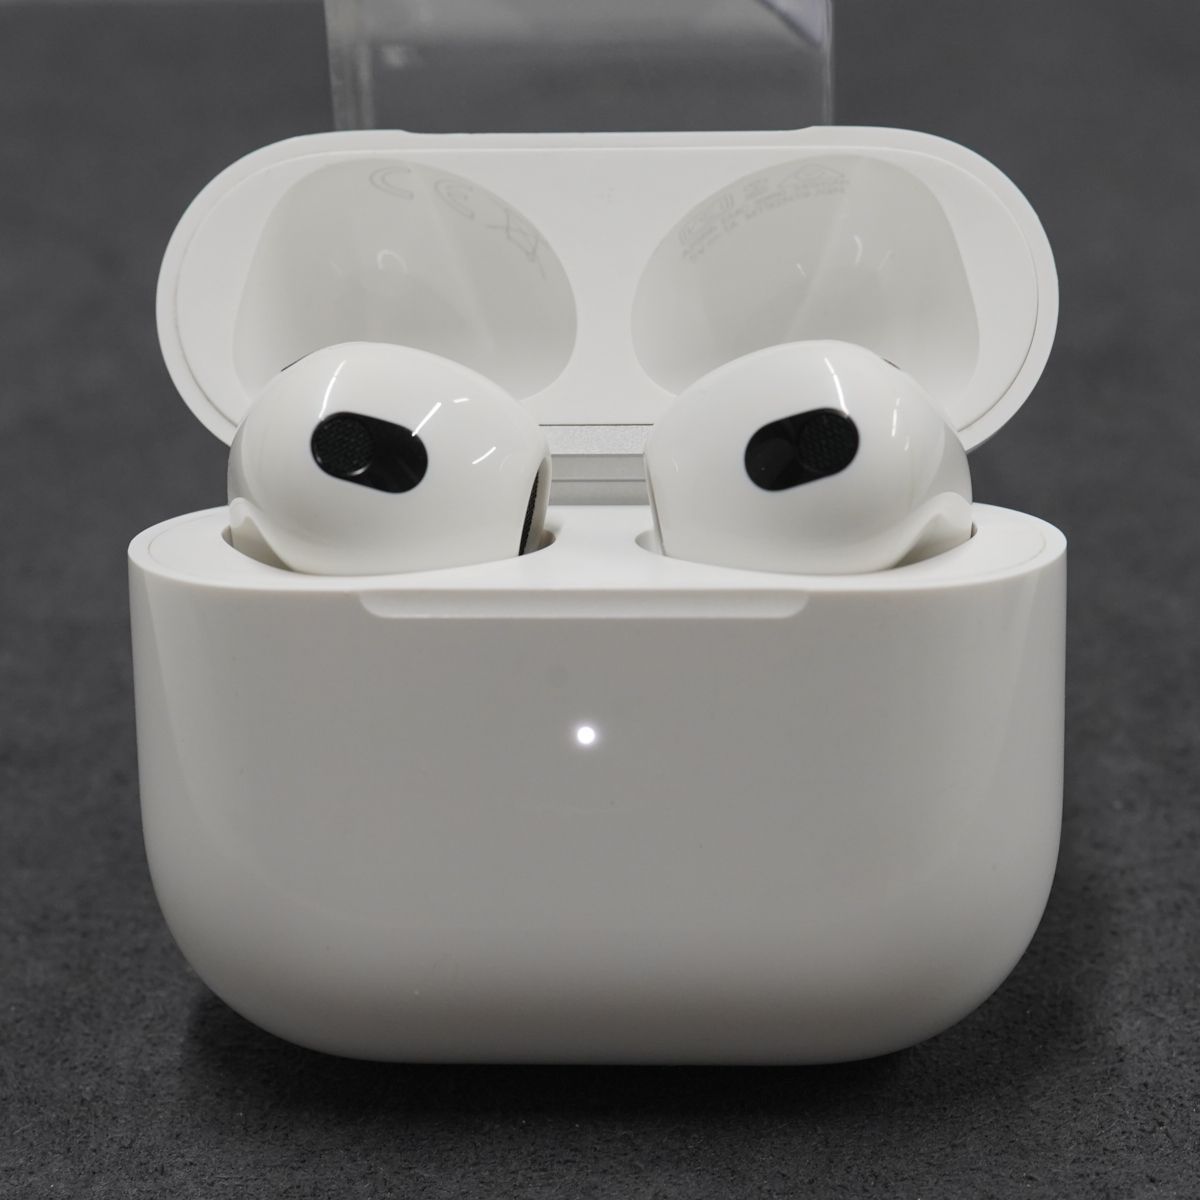 Apple AirPods 第三世代 MagSafe充電ケース付 USED品 ワイヤレス